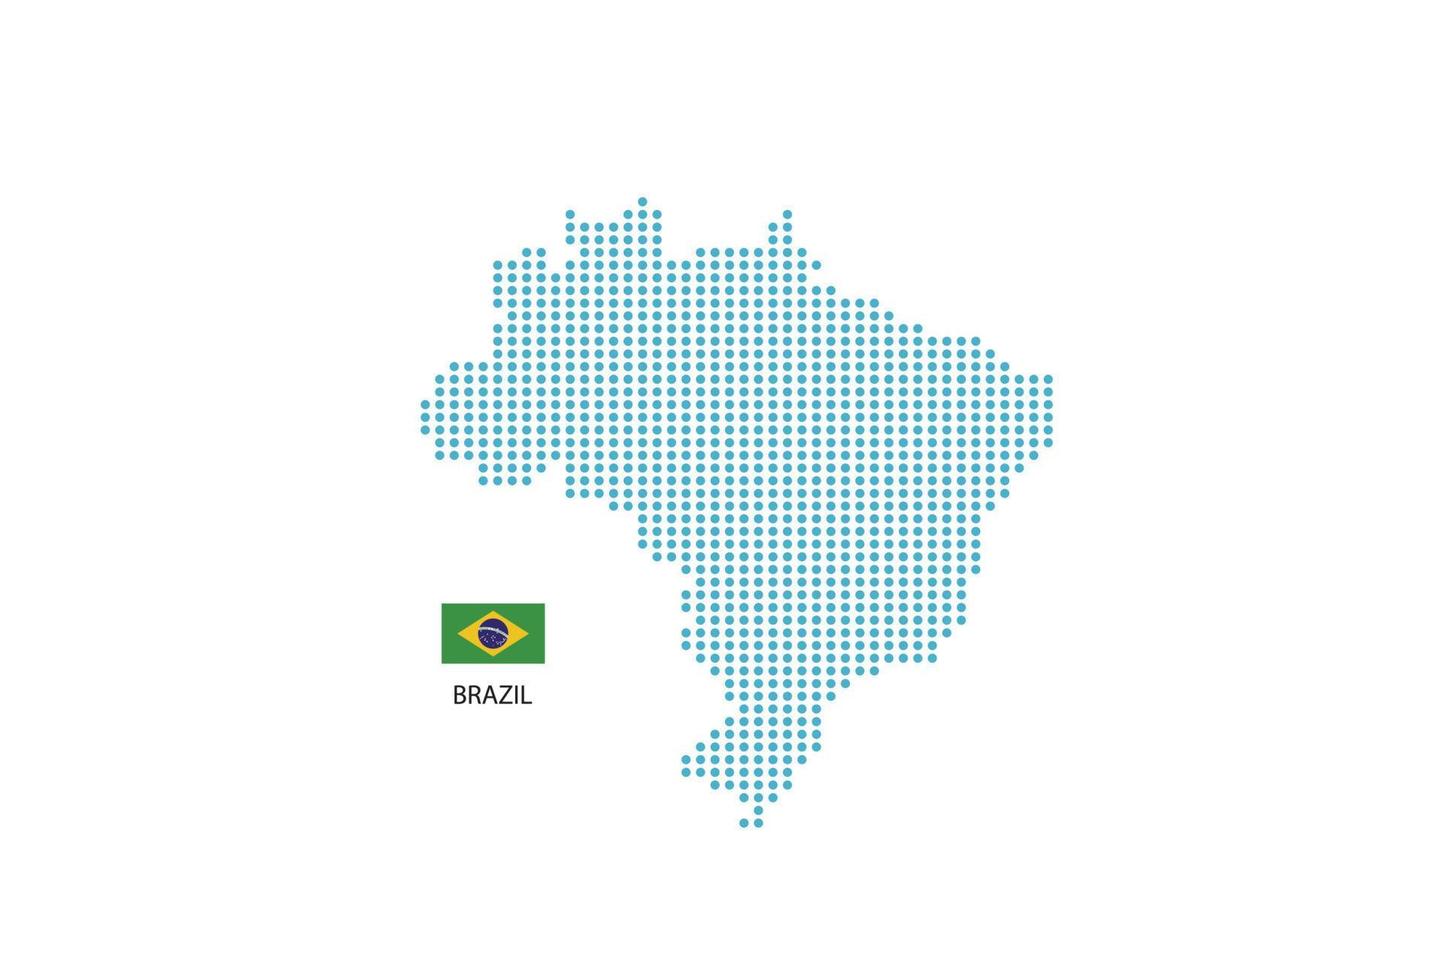 mapa do brasil desenho círculo azul, fundo branco com bandeira do brasil. vetor